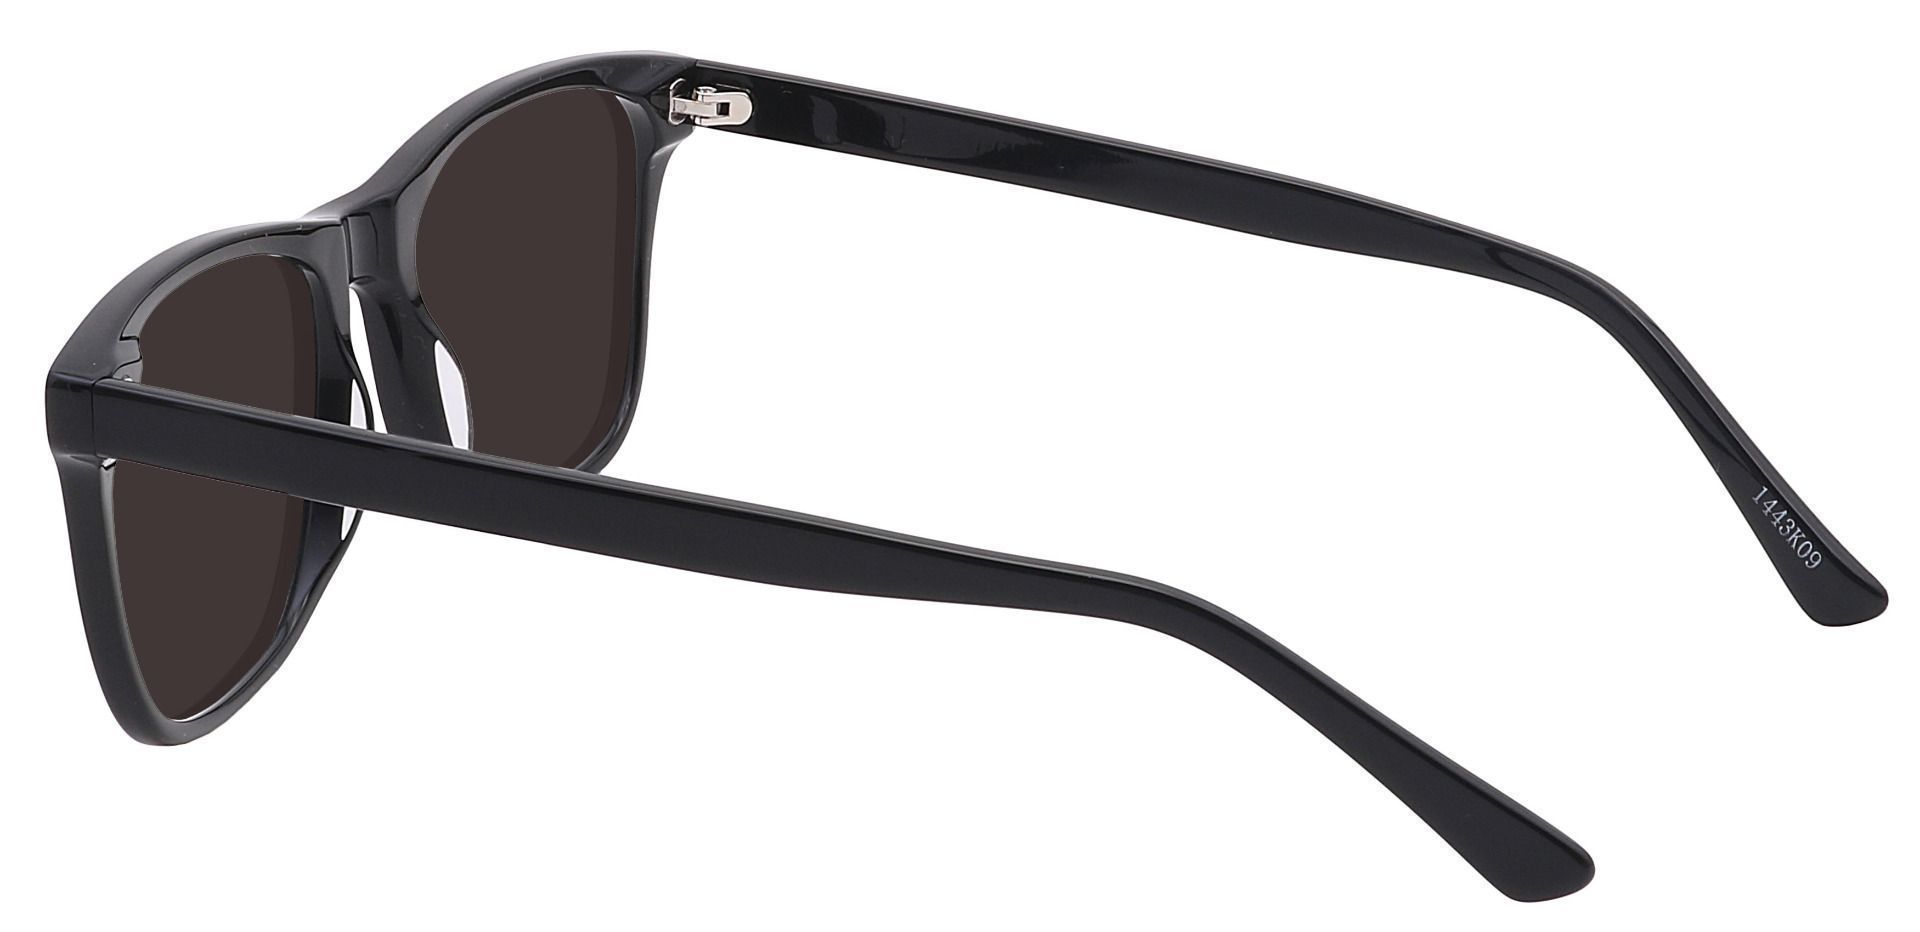 Cantina Square Prescription Sunglasses - Black Frame With Gray Lenses